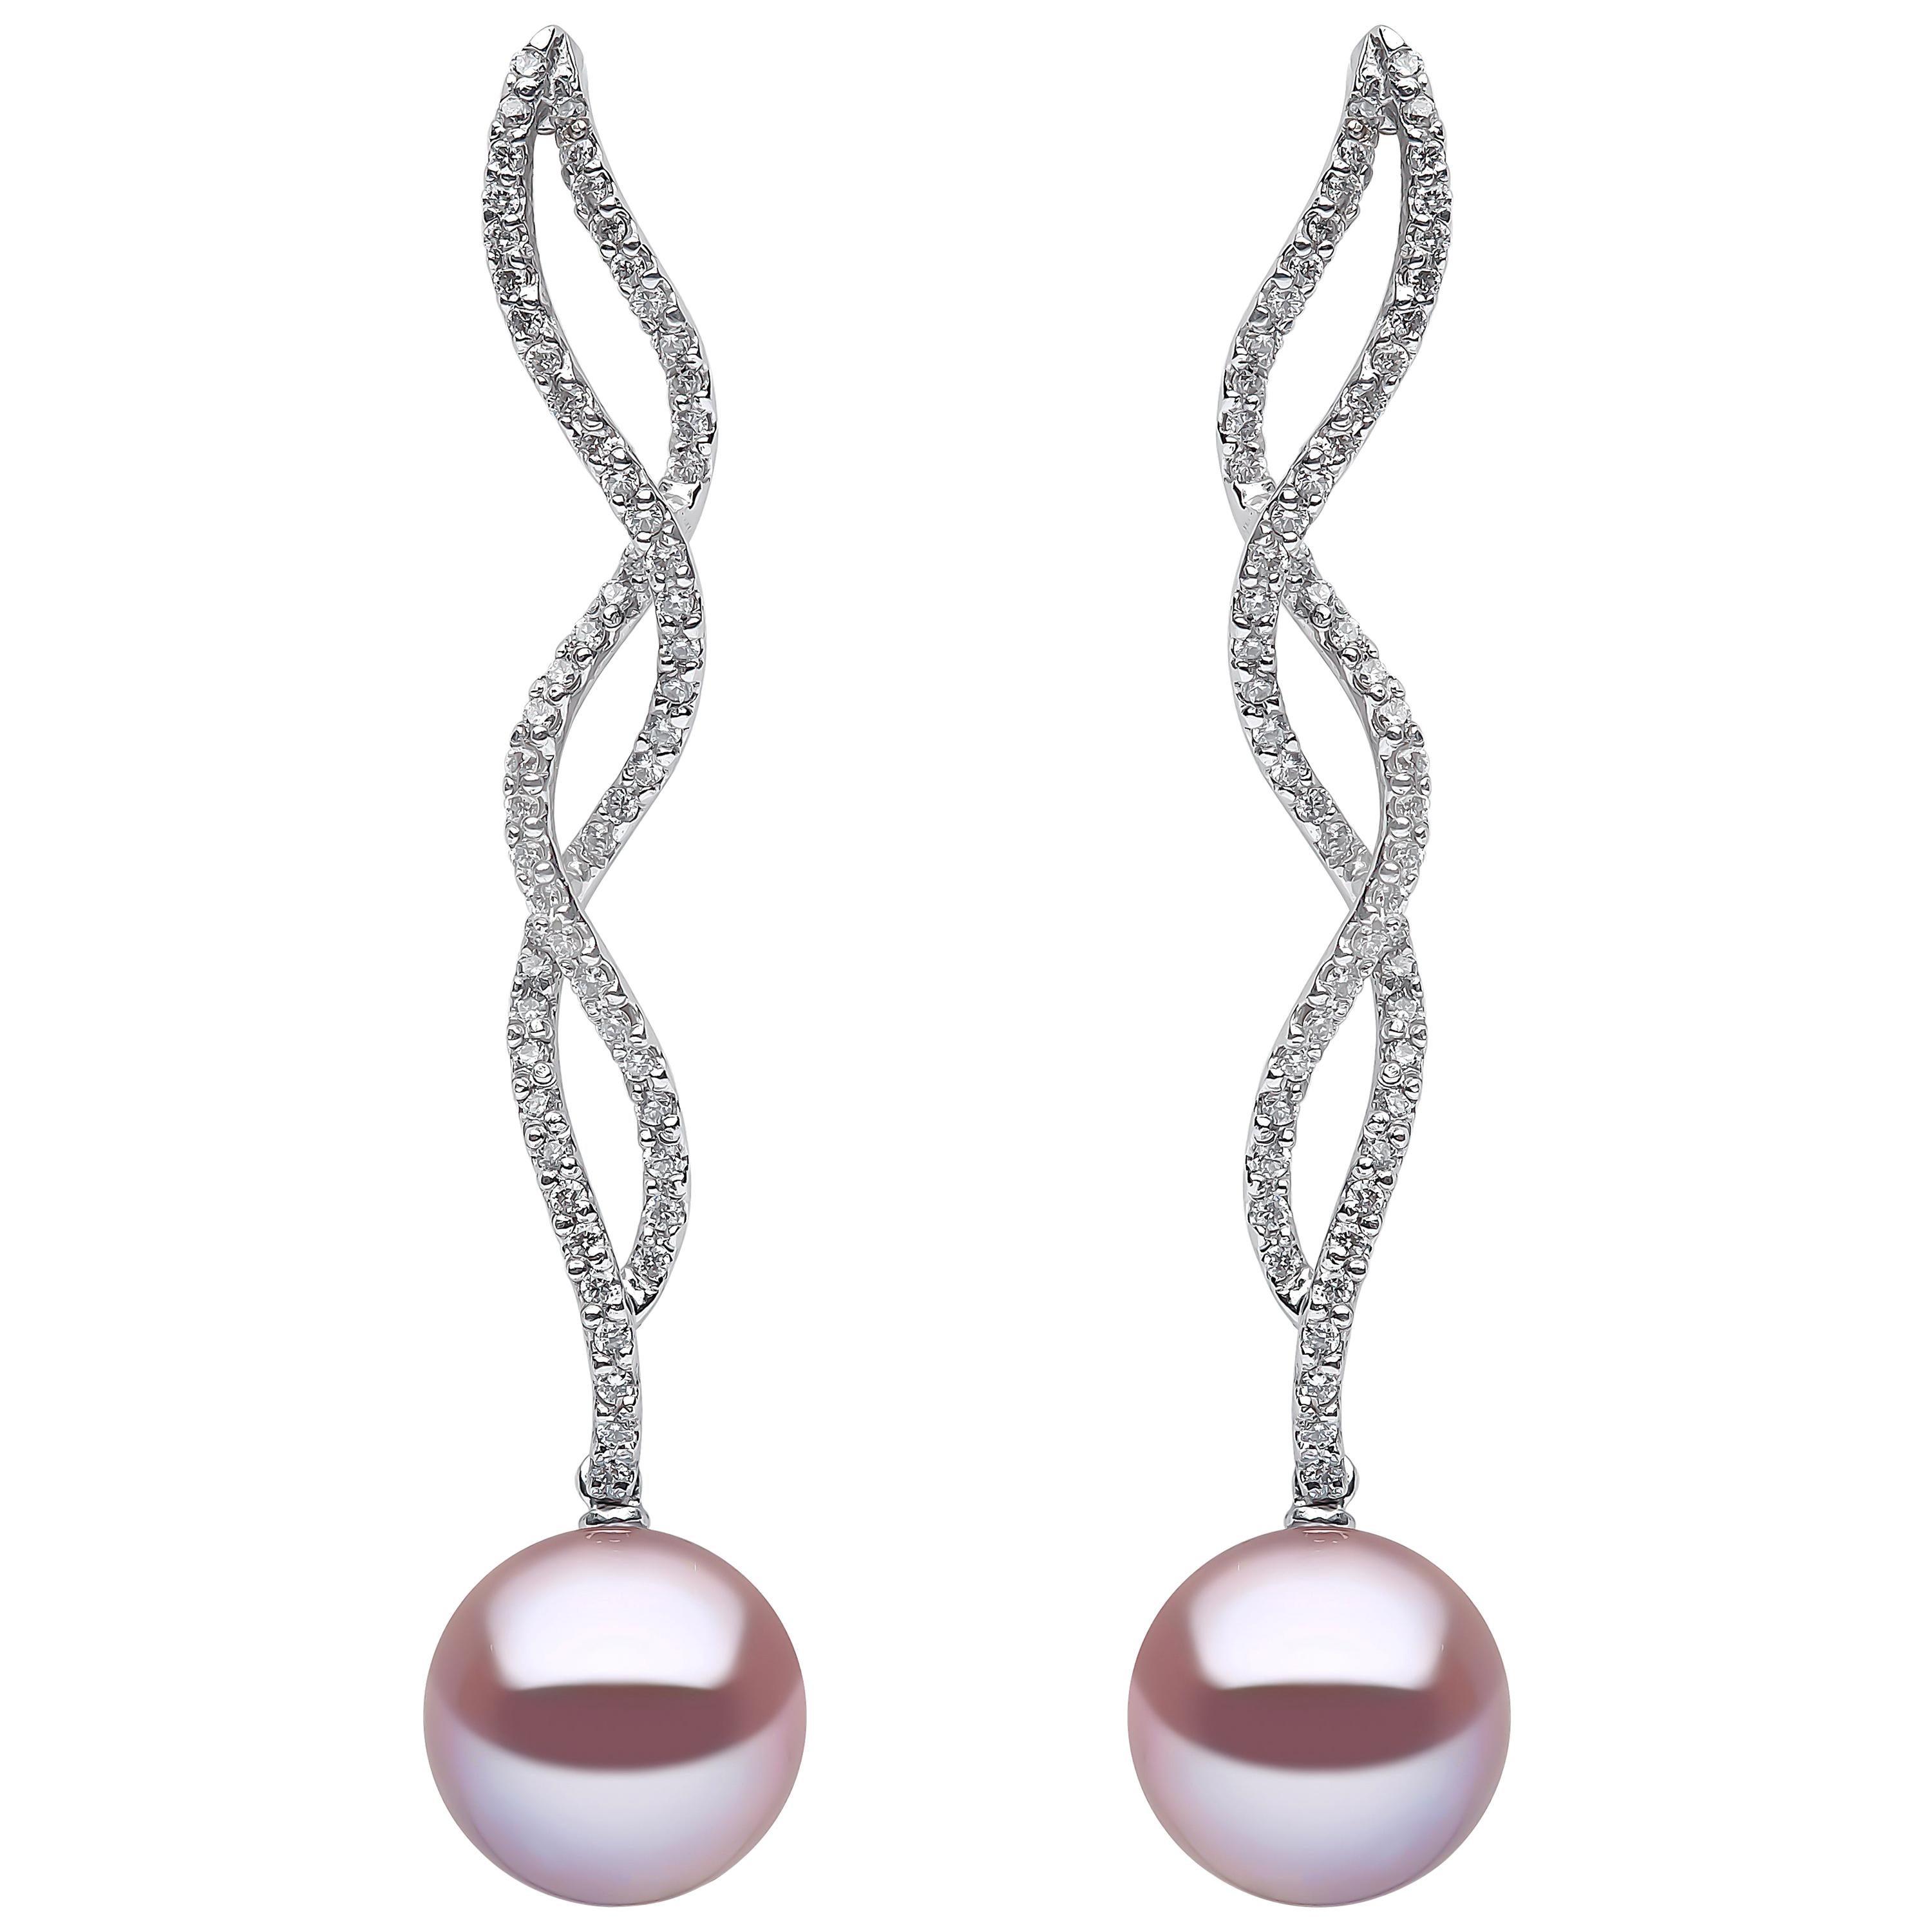 Yoko London Pink Freshwater Pearl and Diamond Earrings in 18 Karat White Gold